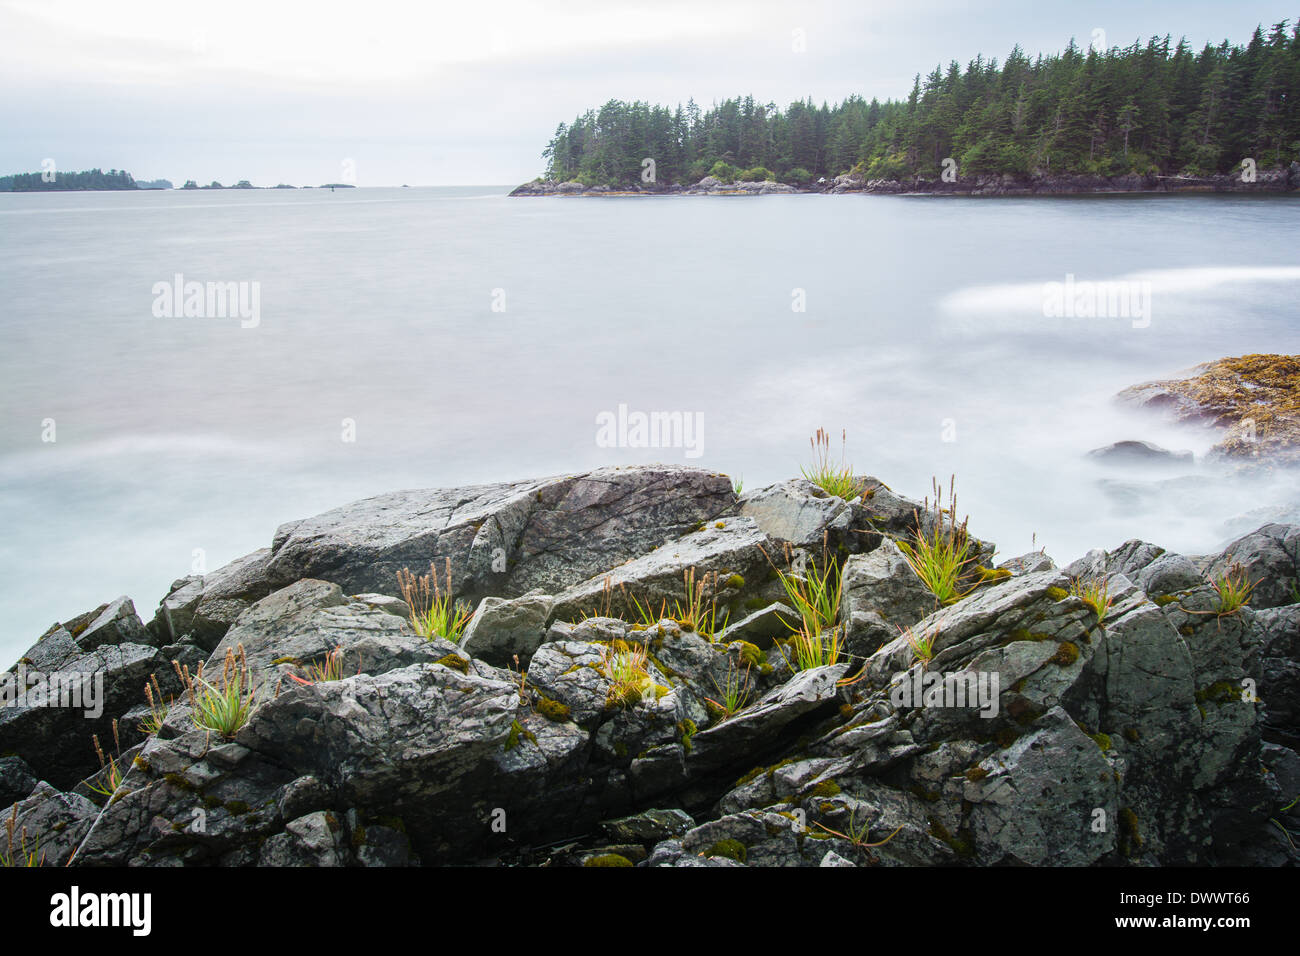 The shores of Bamdoroshni Island off the coast of Sitka, Alaska Stock Photo